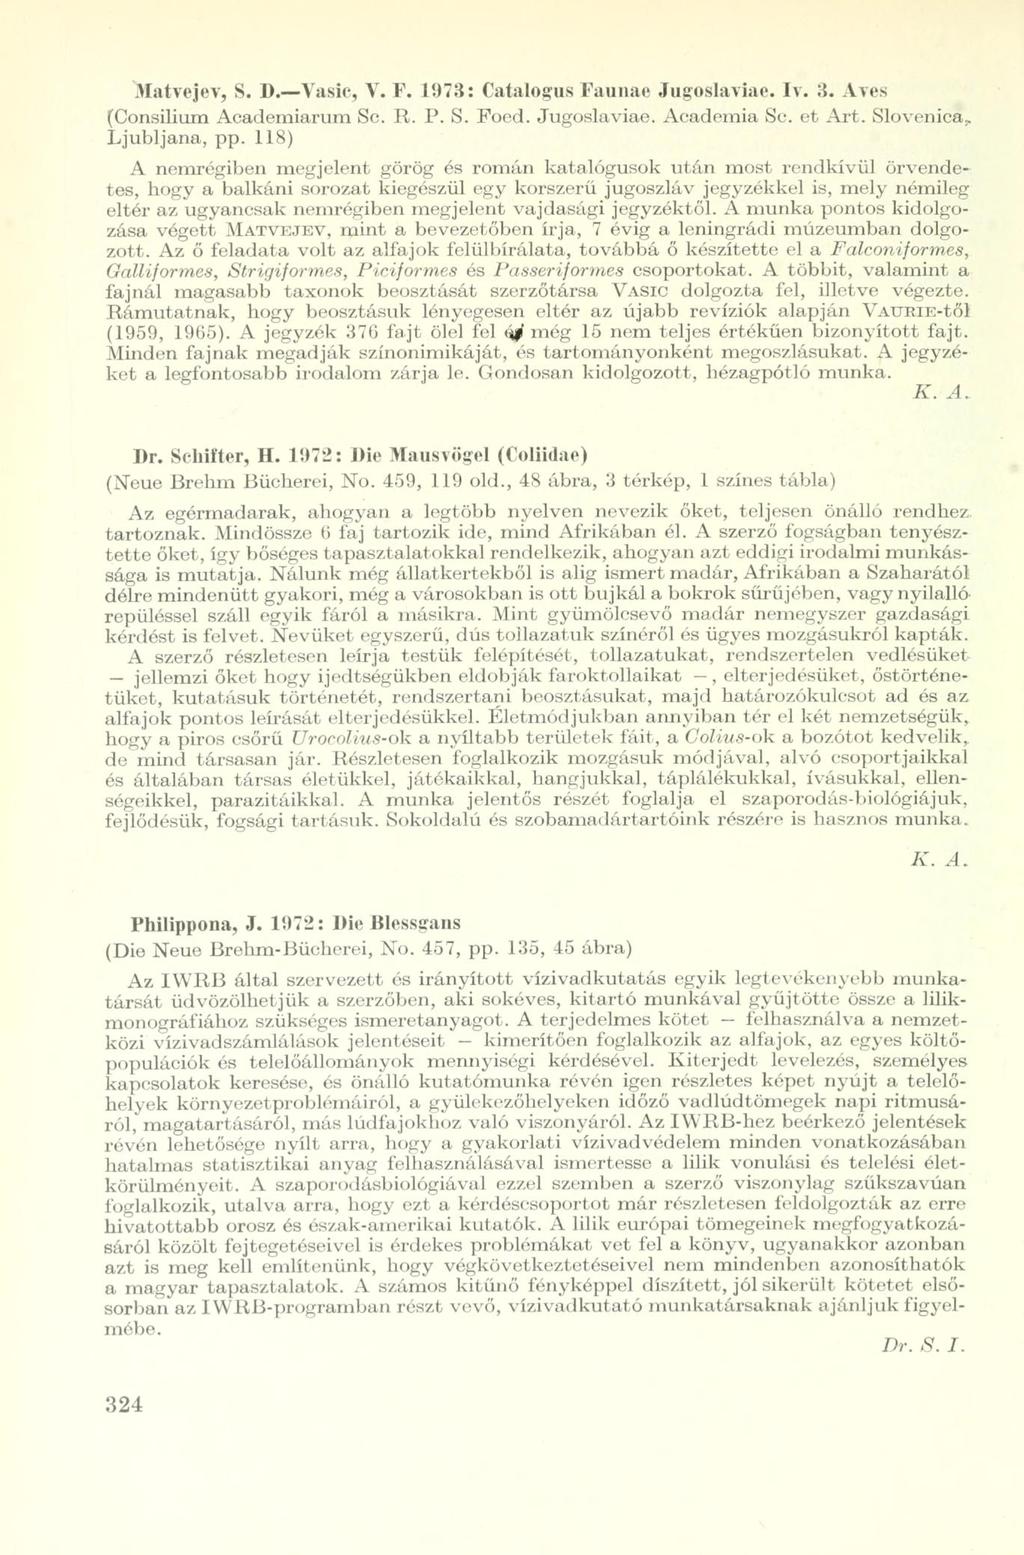 Matvejev, S. D. Vasic, V. F. 1973: Catalogus Faunae Jugoslaviae. Iv. 3. Aves (Consiliurn Academiarum Sc. R. P. S. Foed. Jugoslaviae. Academia Sc. et Art. Slovenica,. Ljubljana, pp.